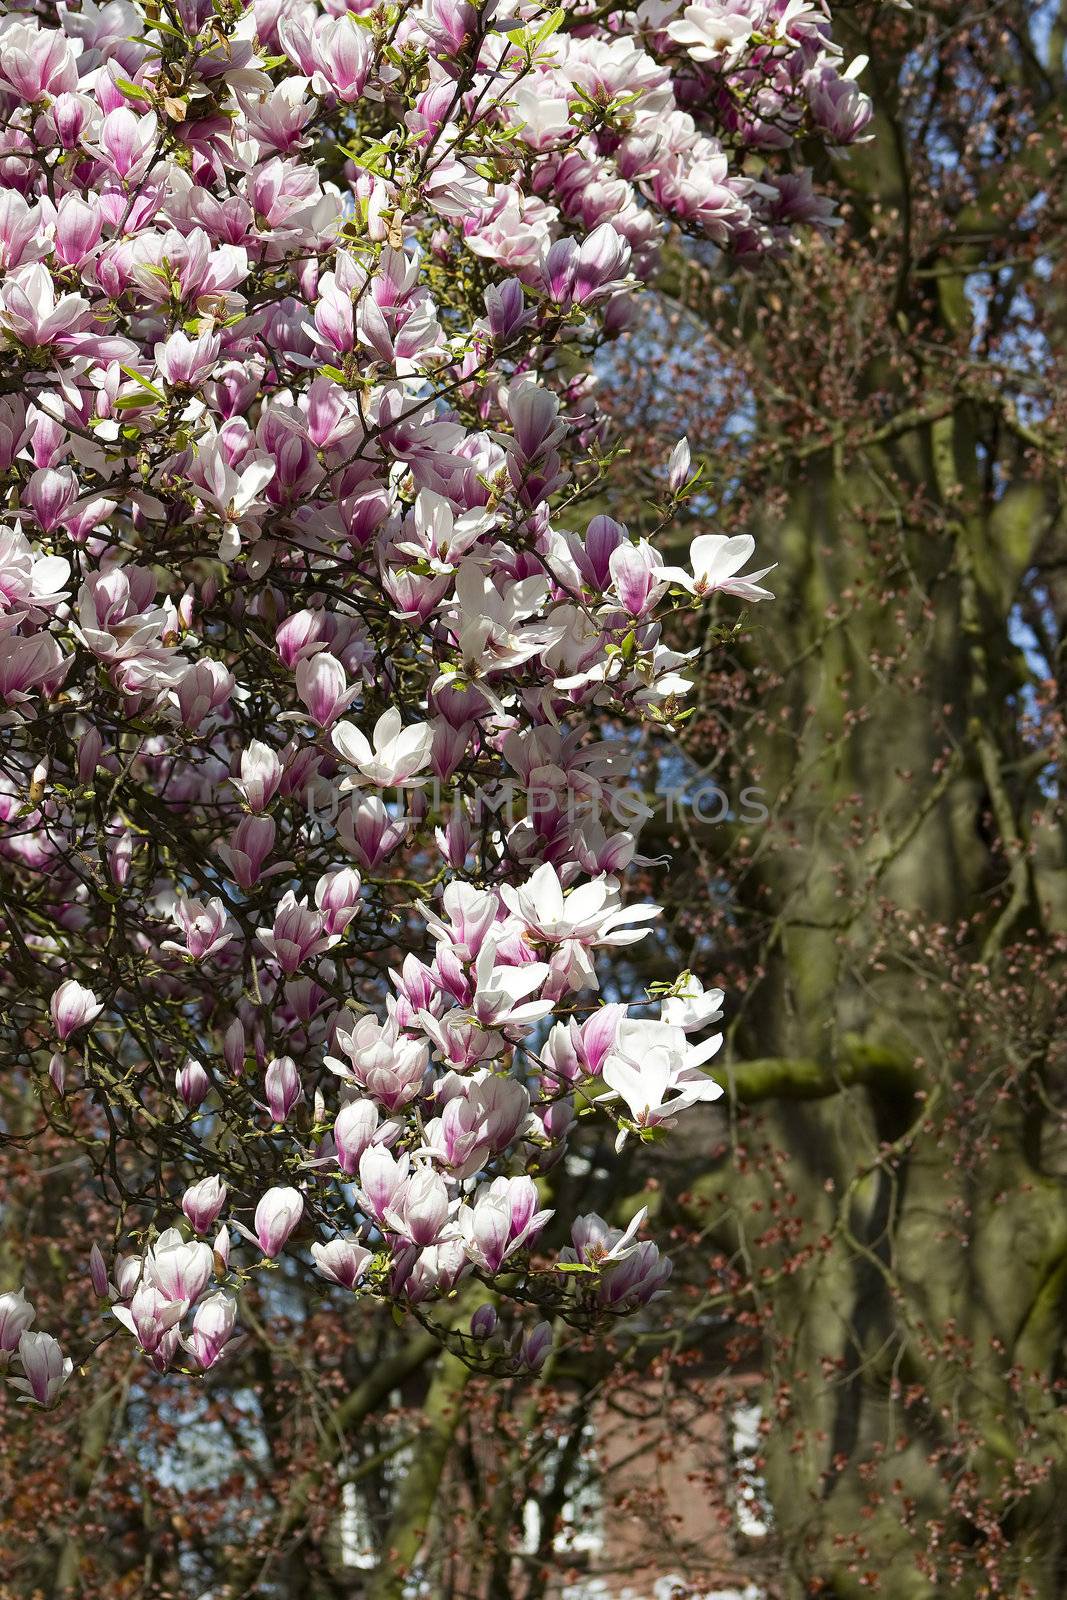 blooming magnolia tree